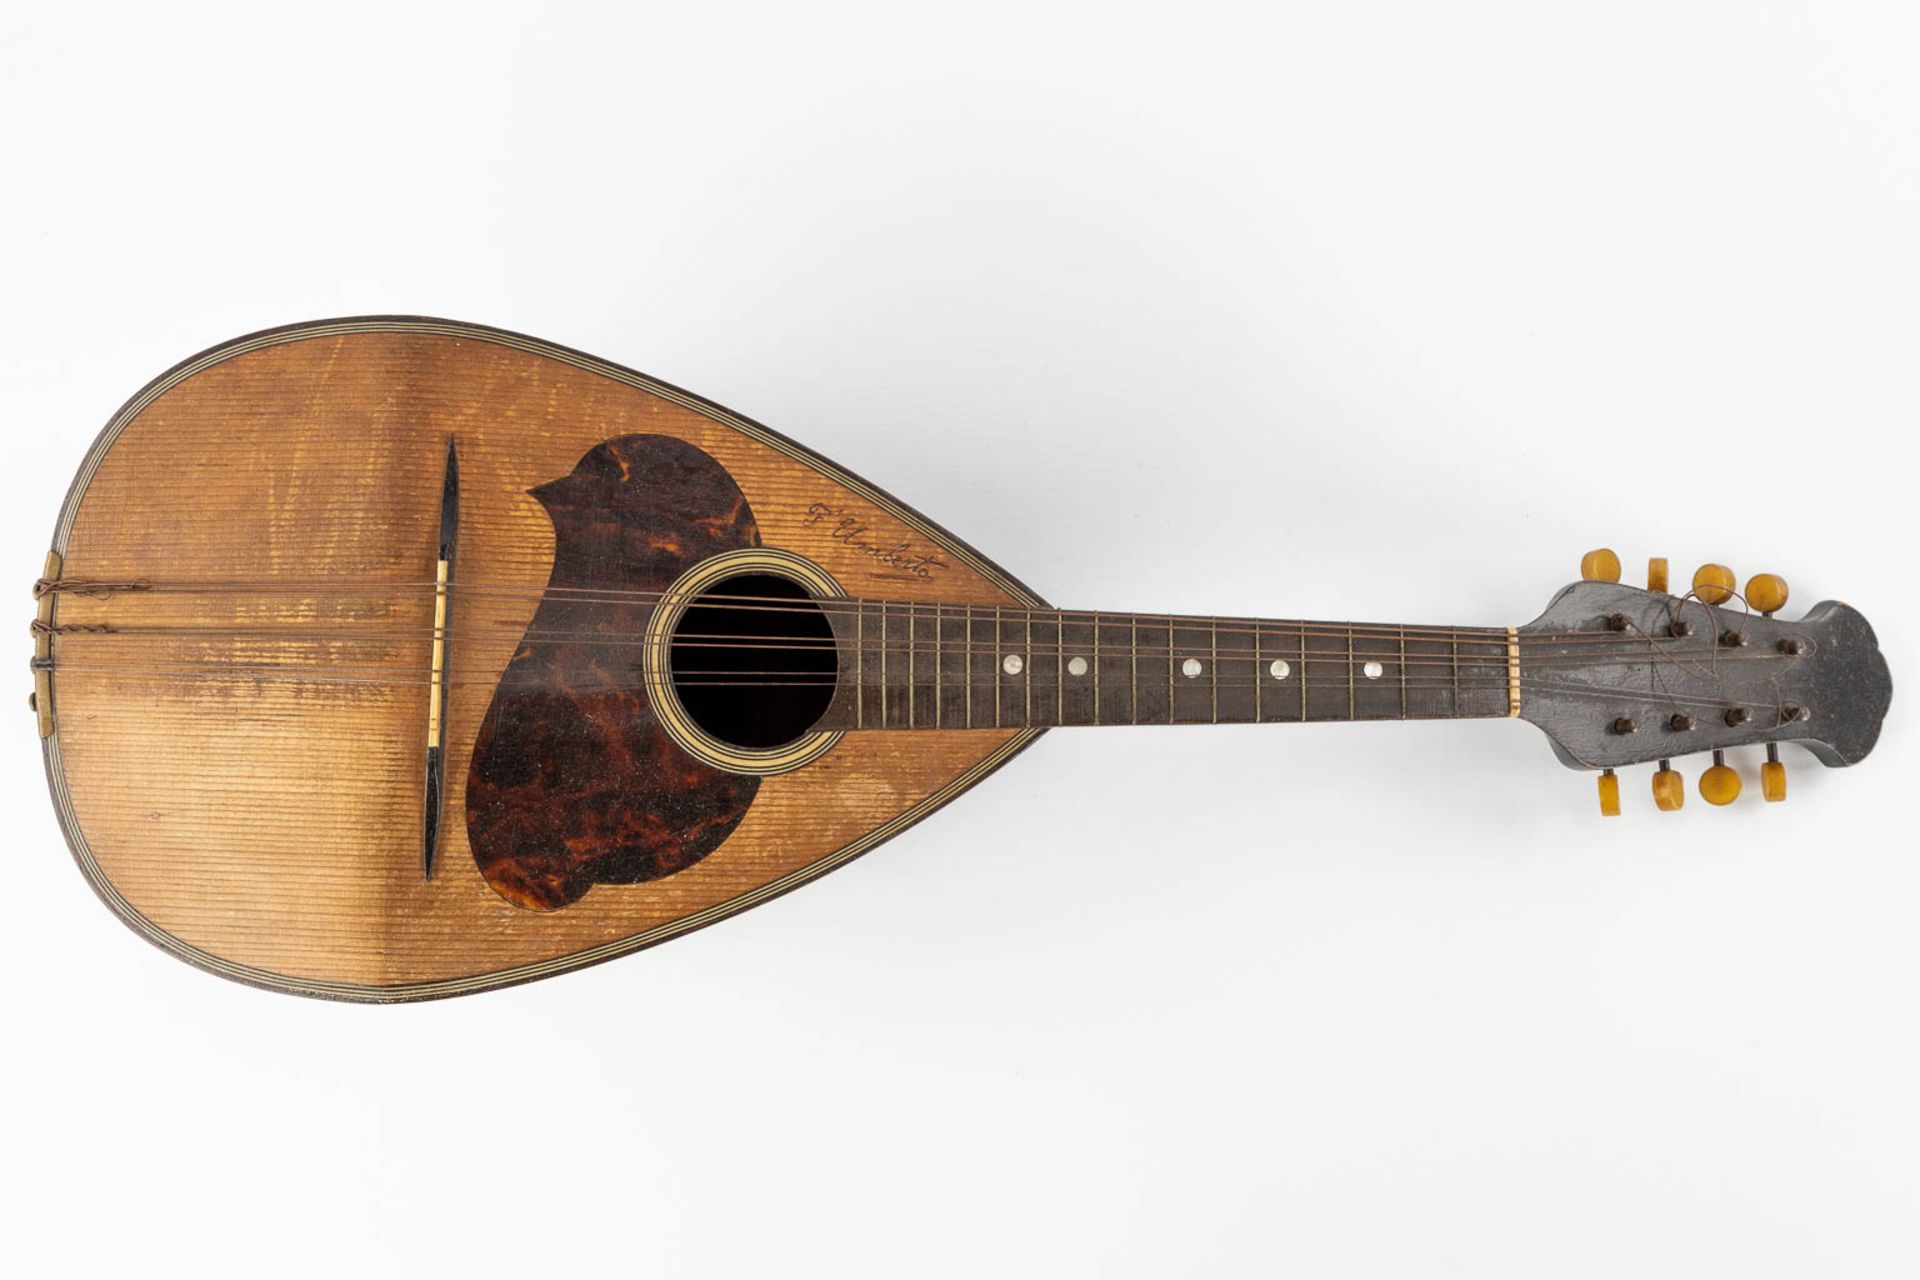 Three mandolines and a Balalaika. 20th C. (D:43 x W:67 x H:12 cm) - Image 11 of 36